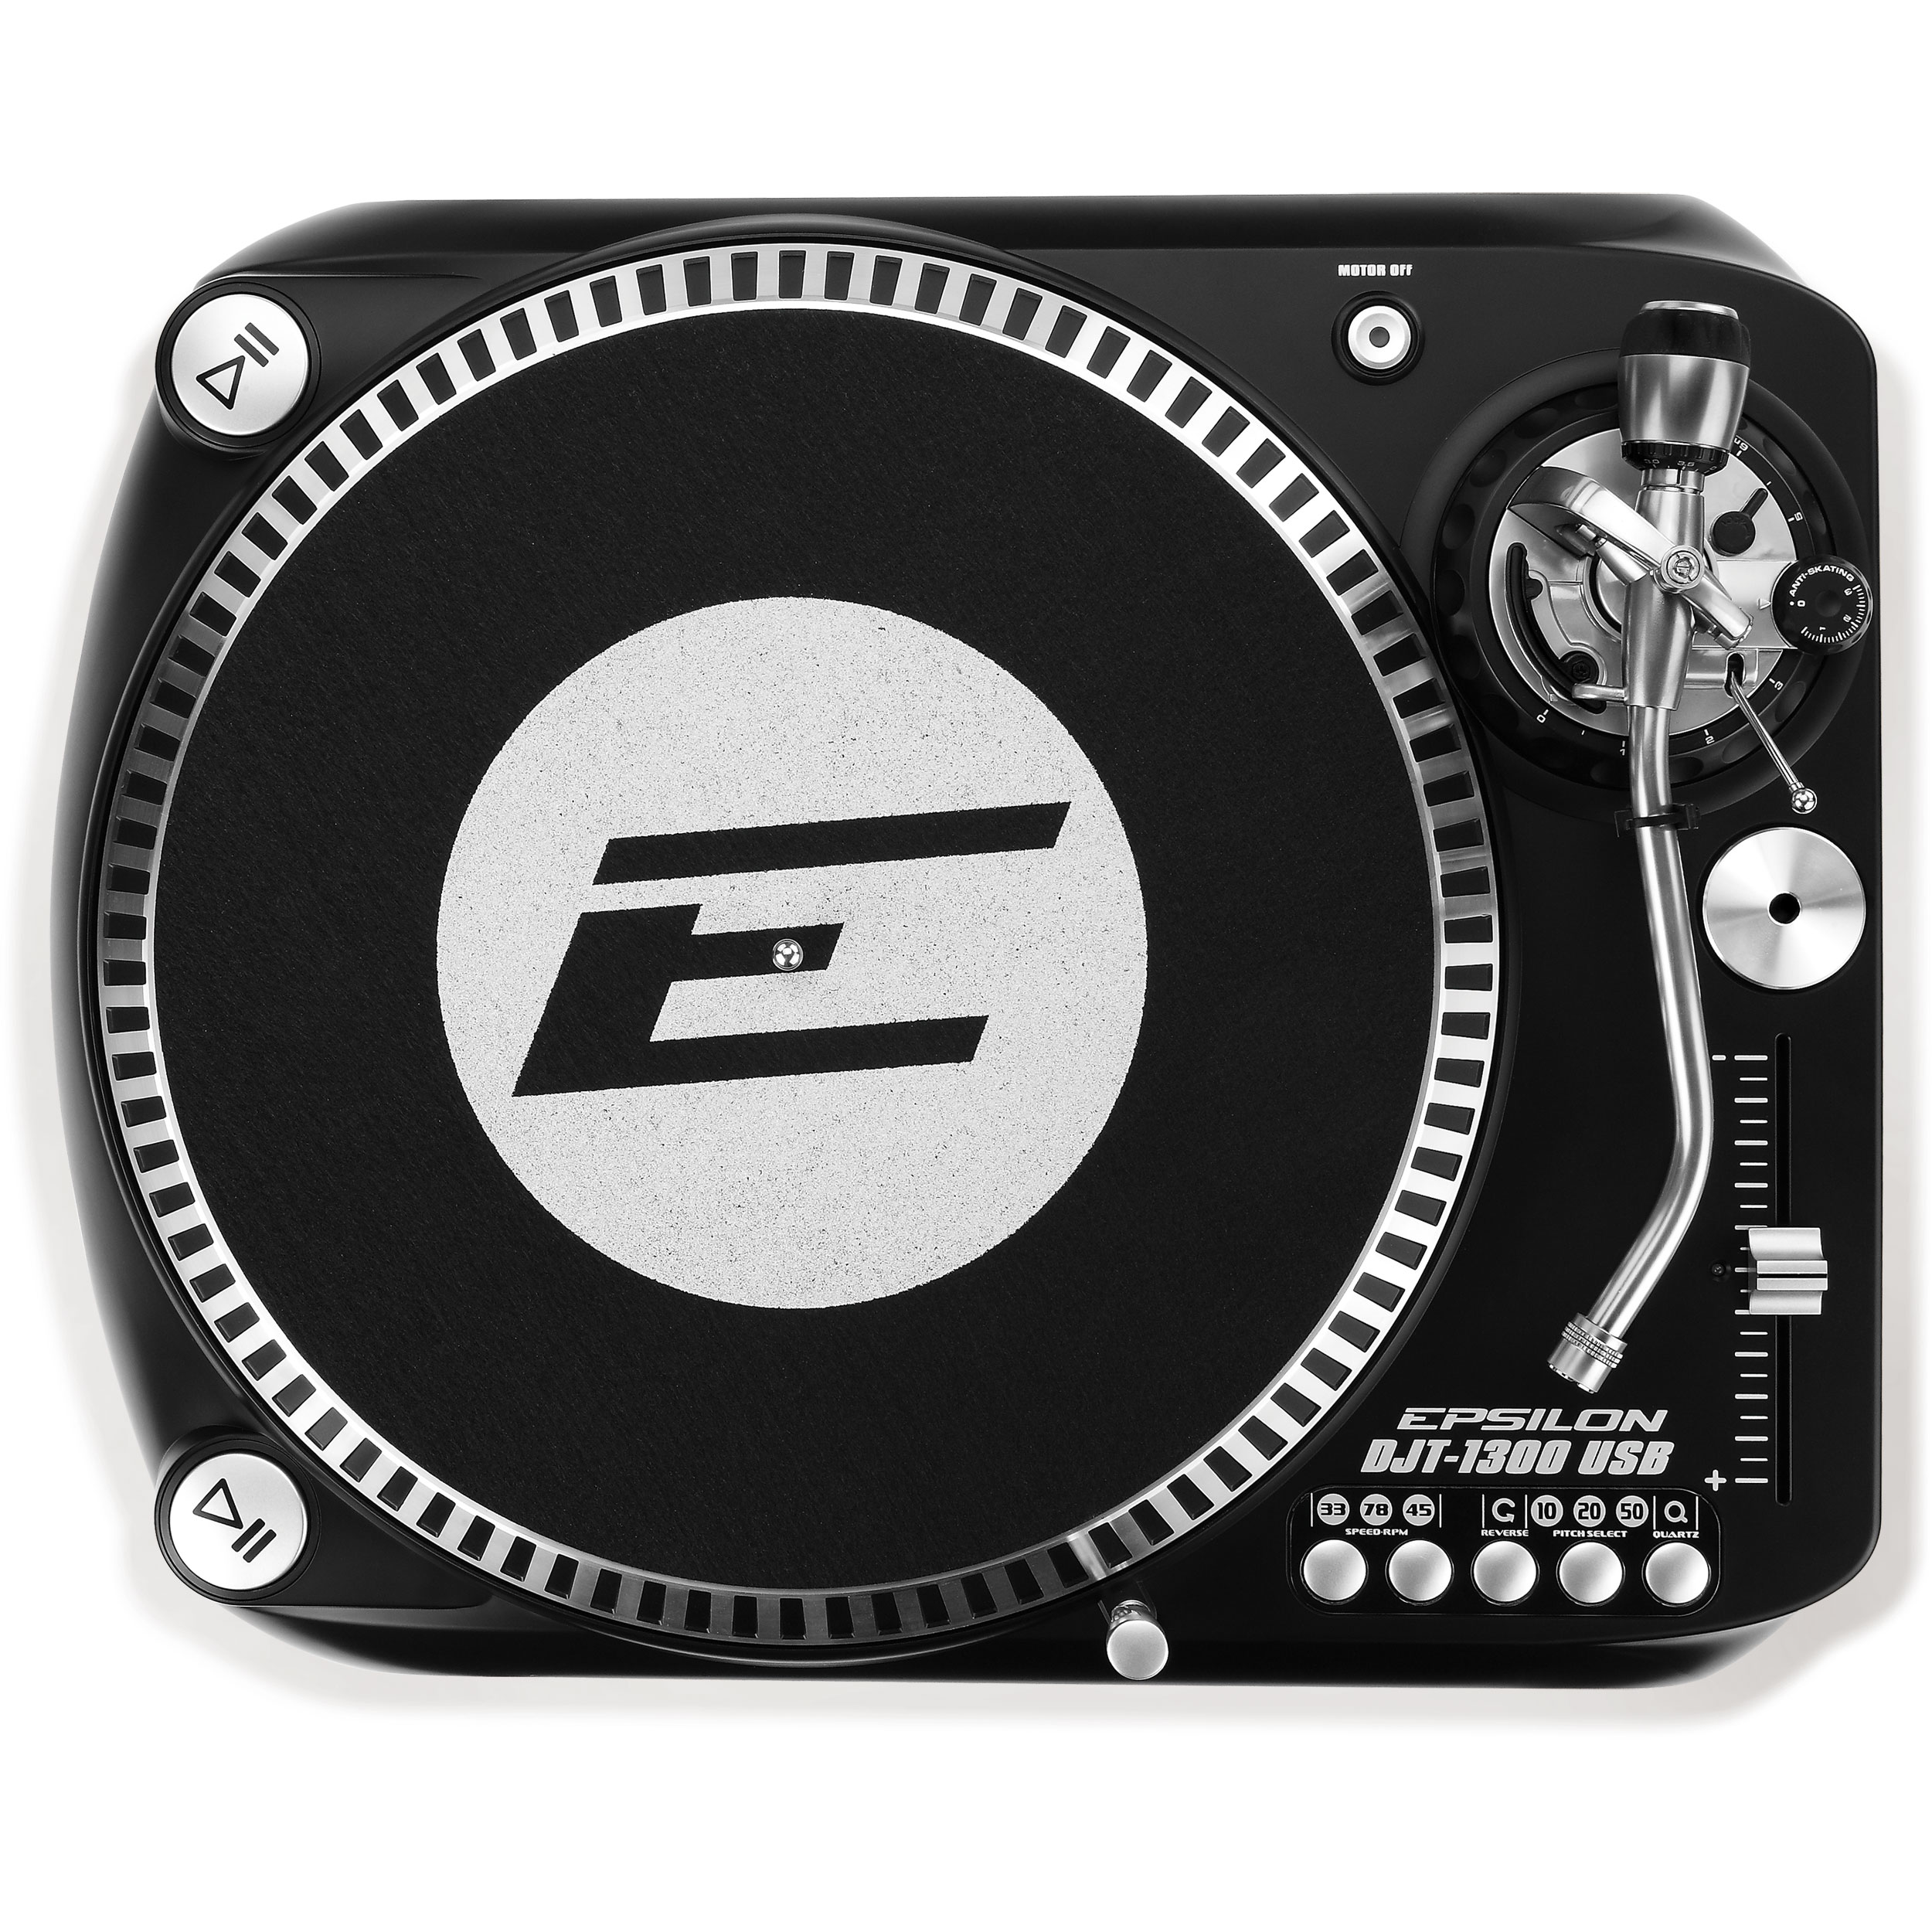 Silver Epsilon DJT-1300 USB DJ Turntable 